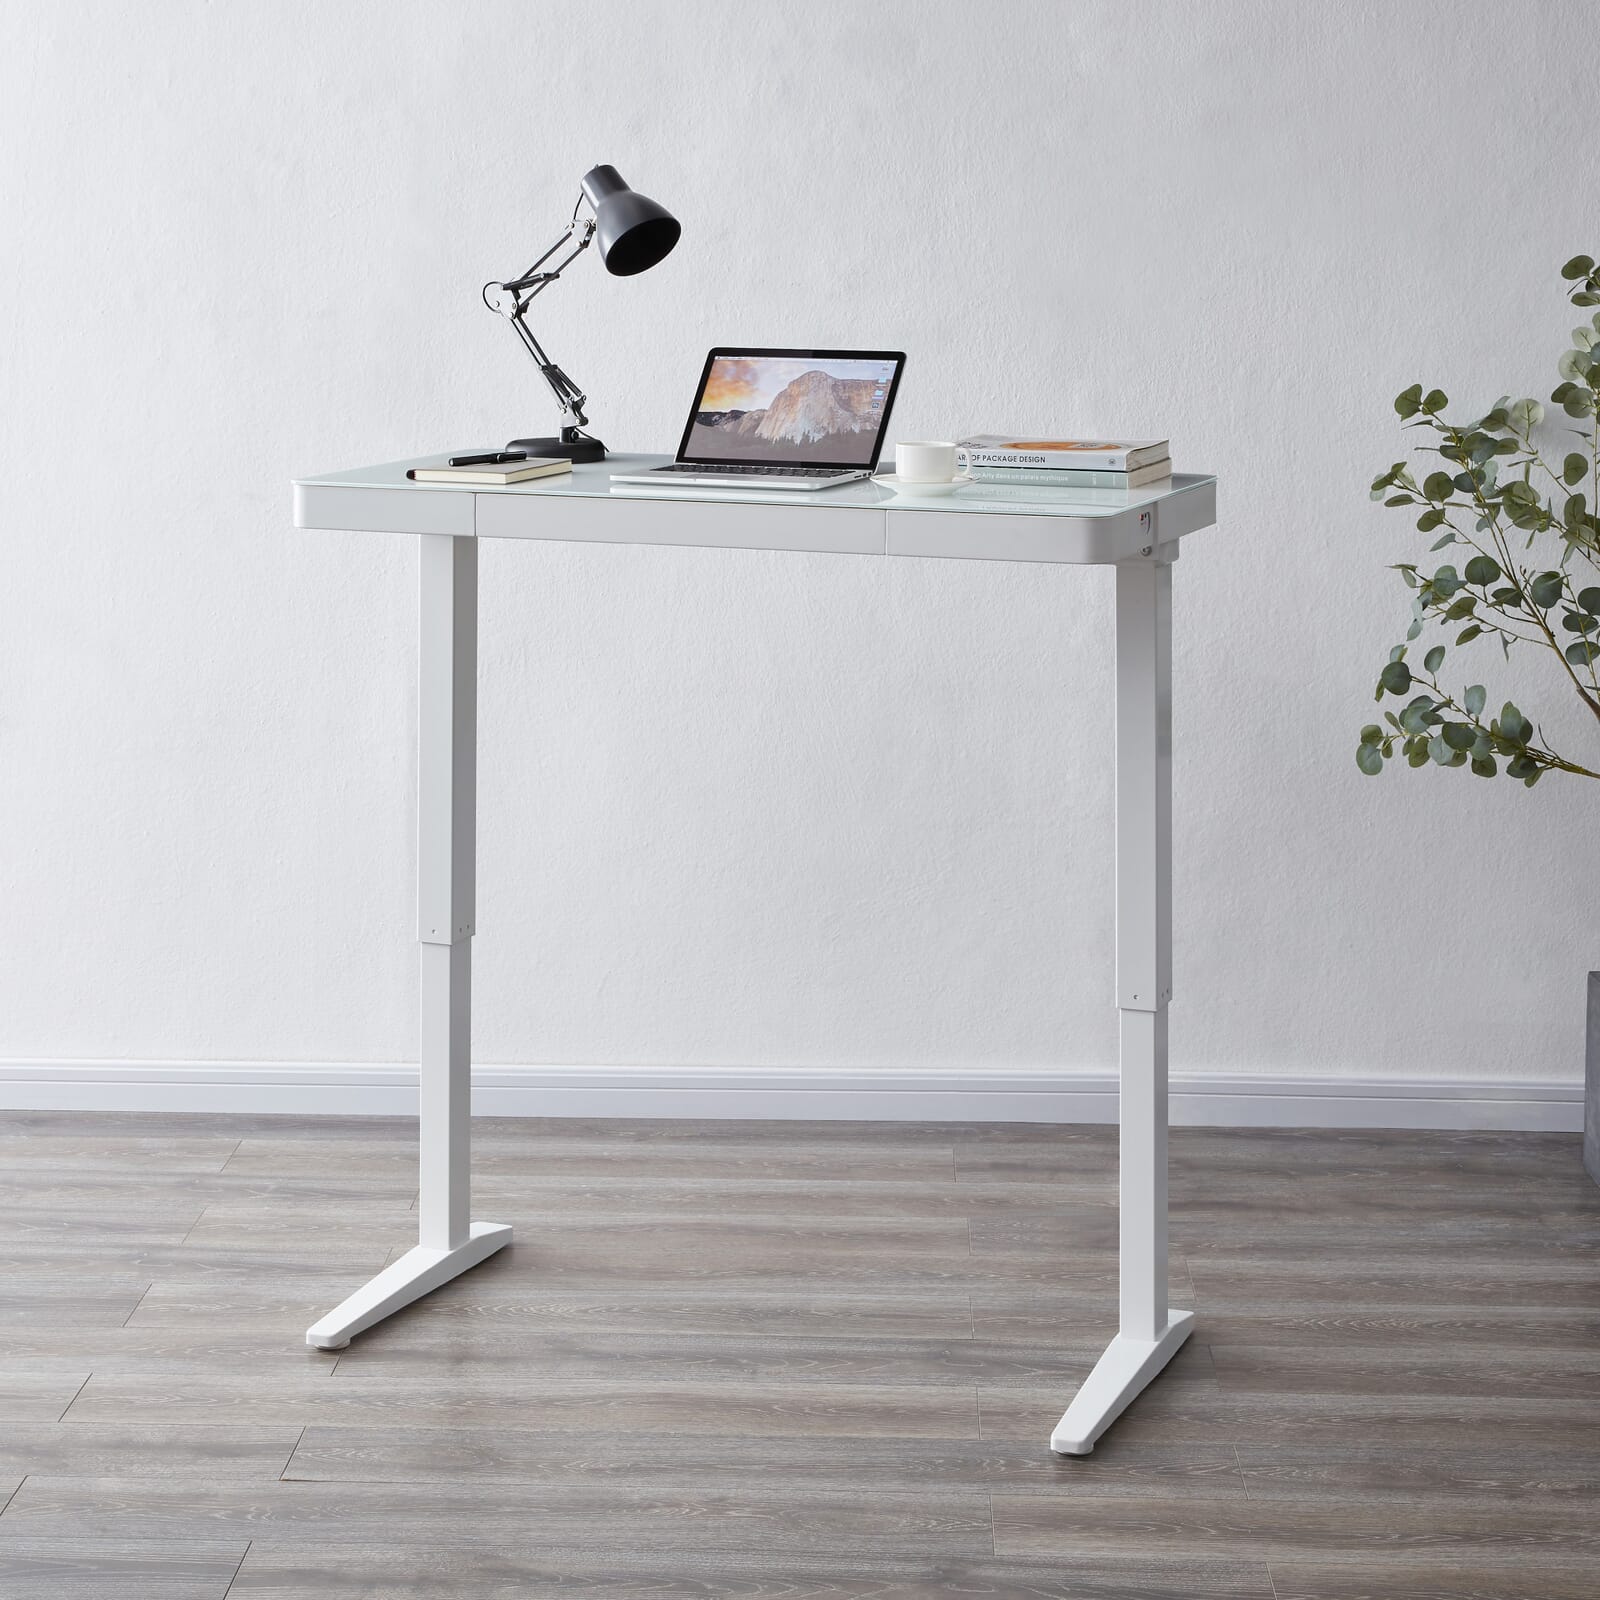 Lana Height adjustable desk at highest point